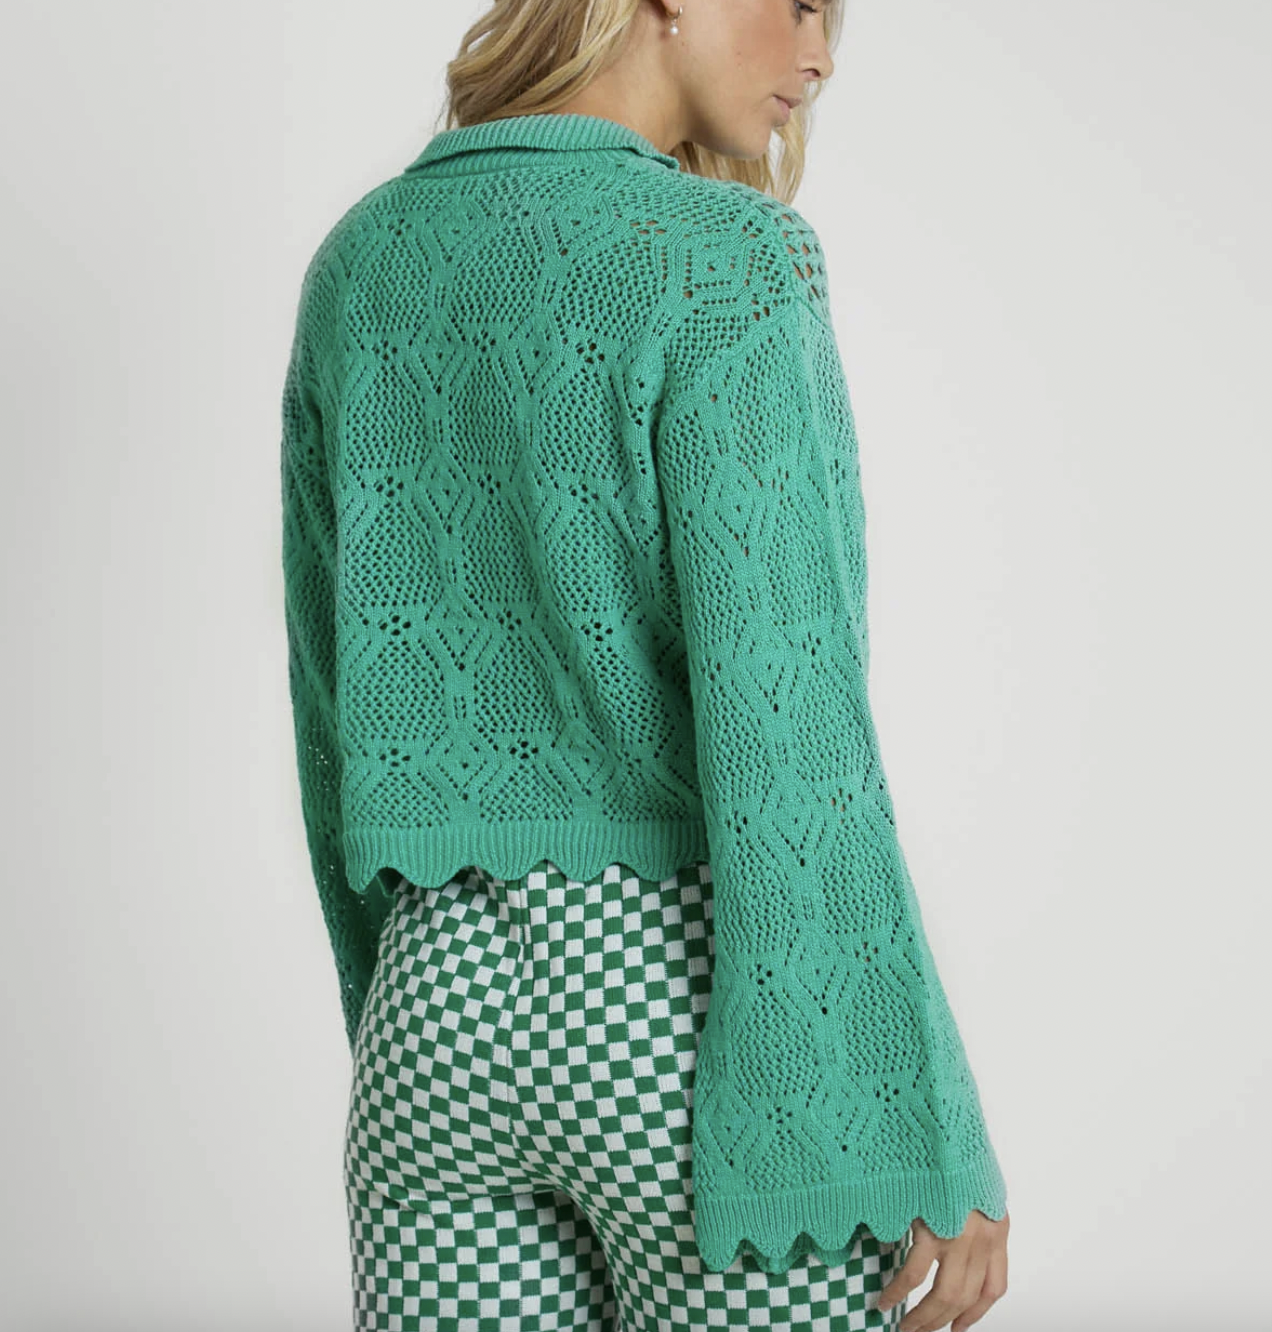 Maddox Crochet Cardigan - Green